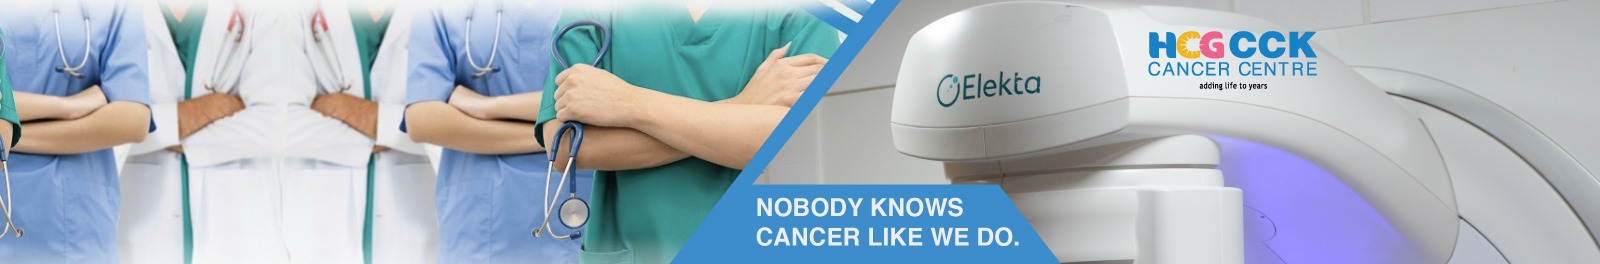 HCG-CCK-CANCER-CENTRE-cancer